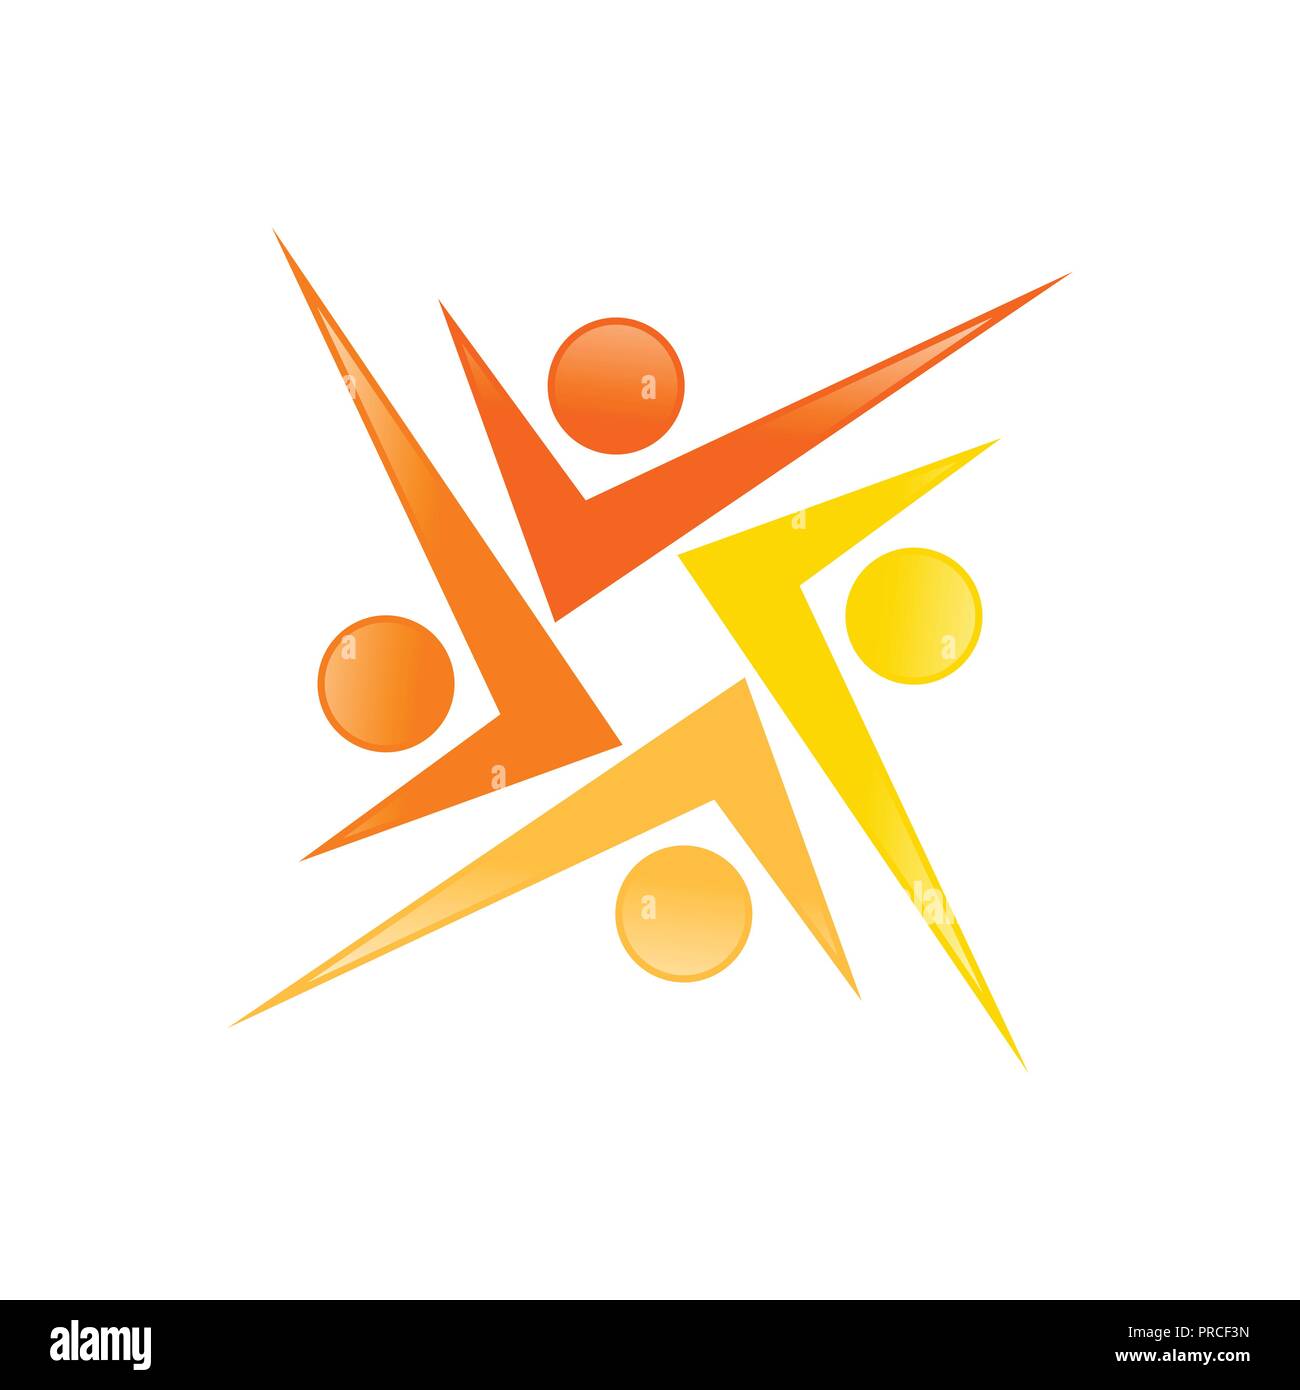 Häkchen Form sozialen Menschen Bewegung Geometrie Vektor Symbol Grafik Logo Design Template Stock Vektor